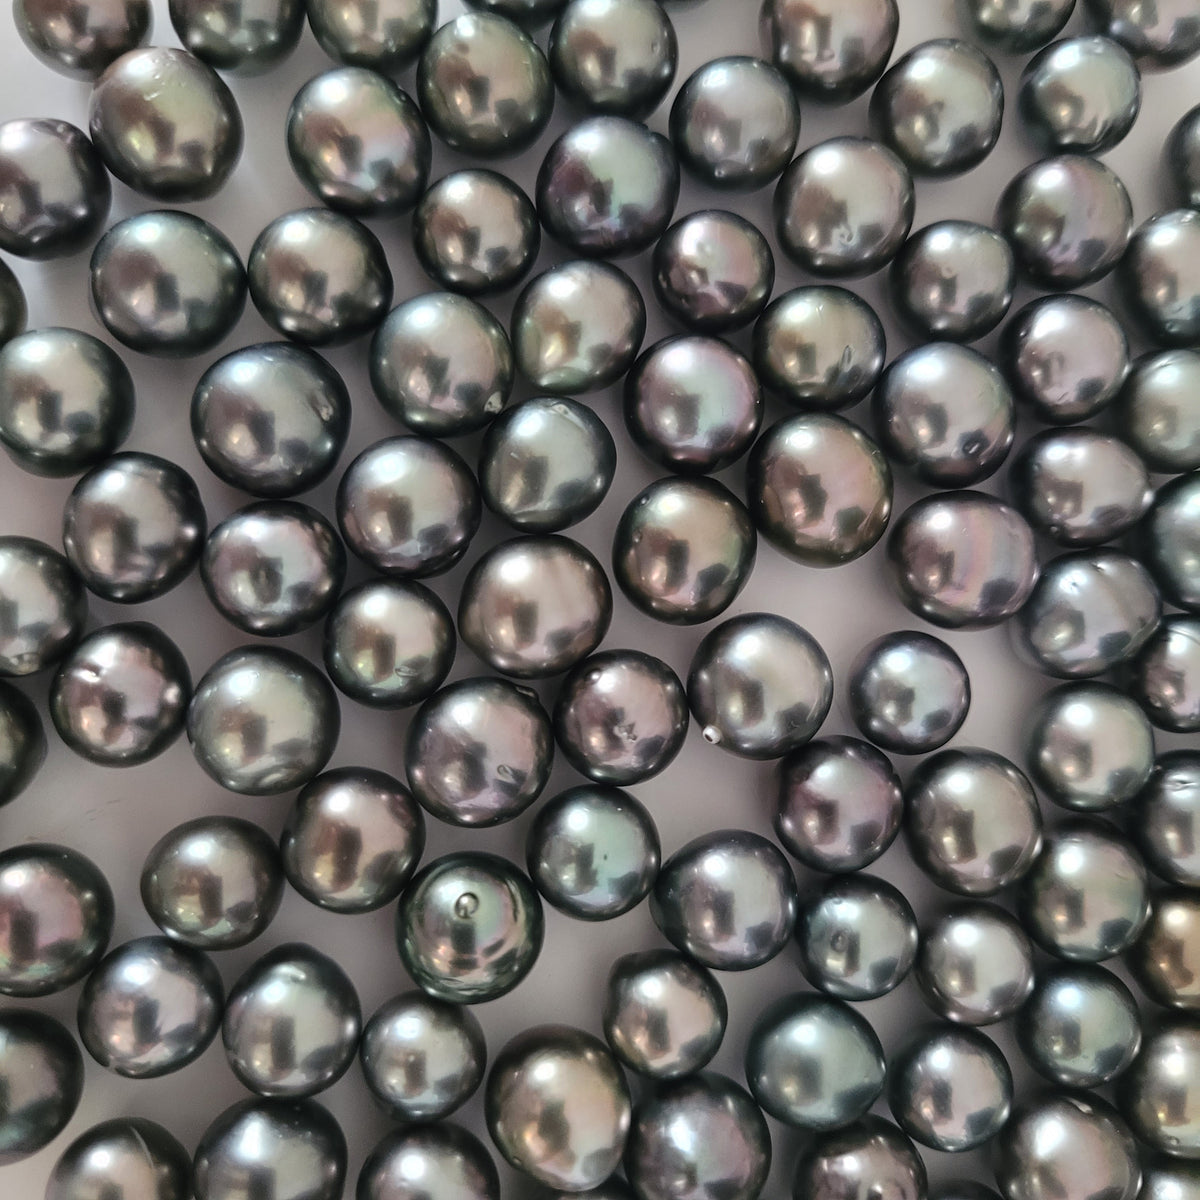 Loose South Sea Pearls - Wholesale South Sea Pearls